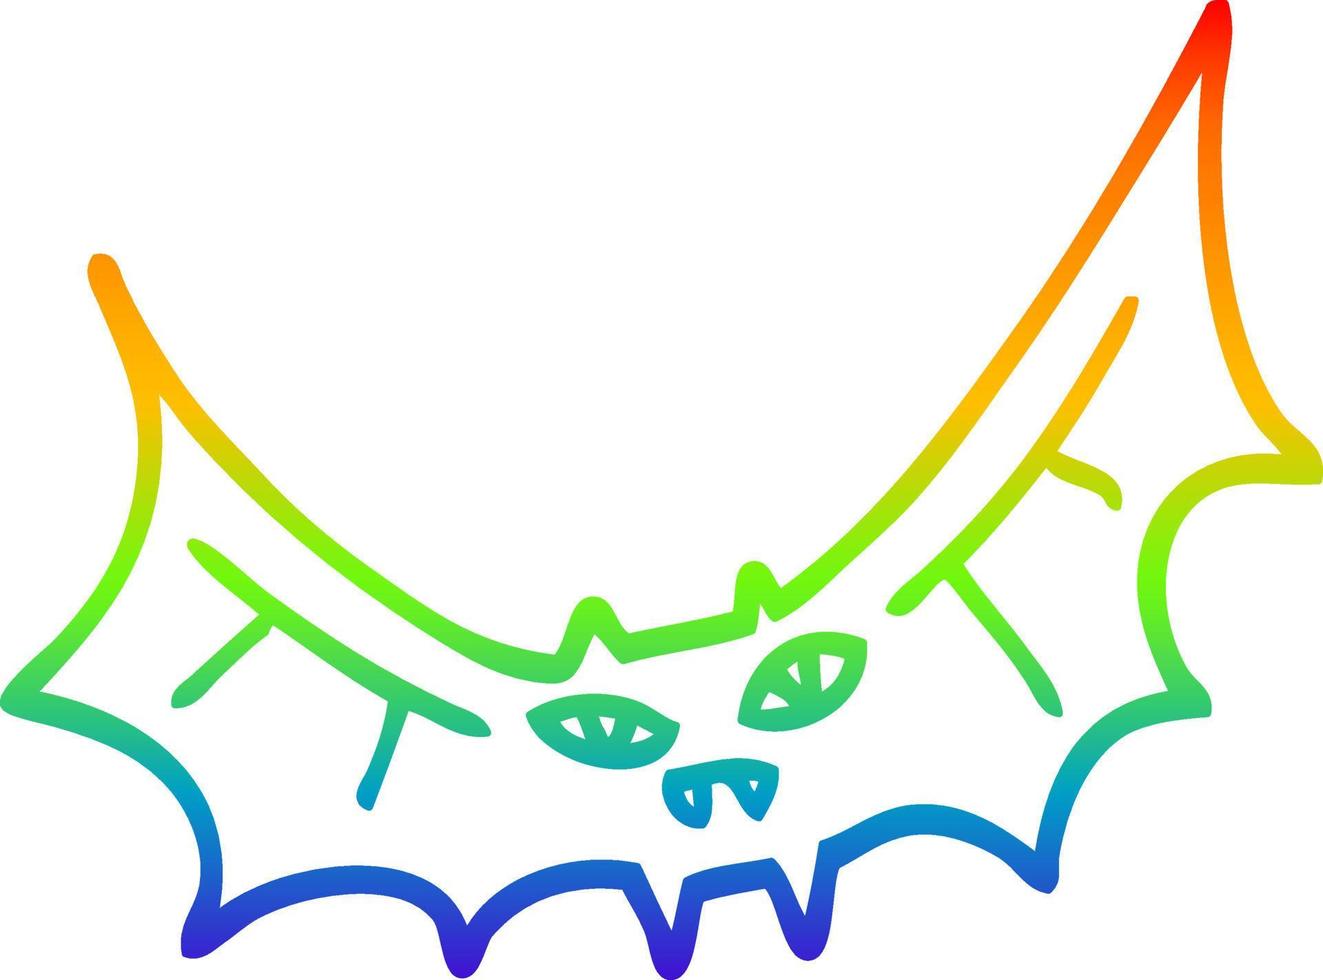 murciélago de dibujos animados de dibujo de línea de degradado de arco iris vector